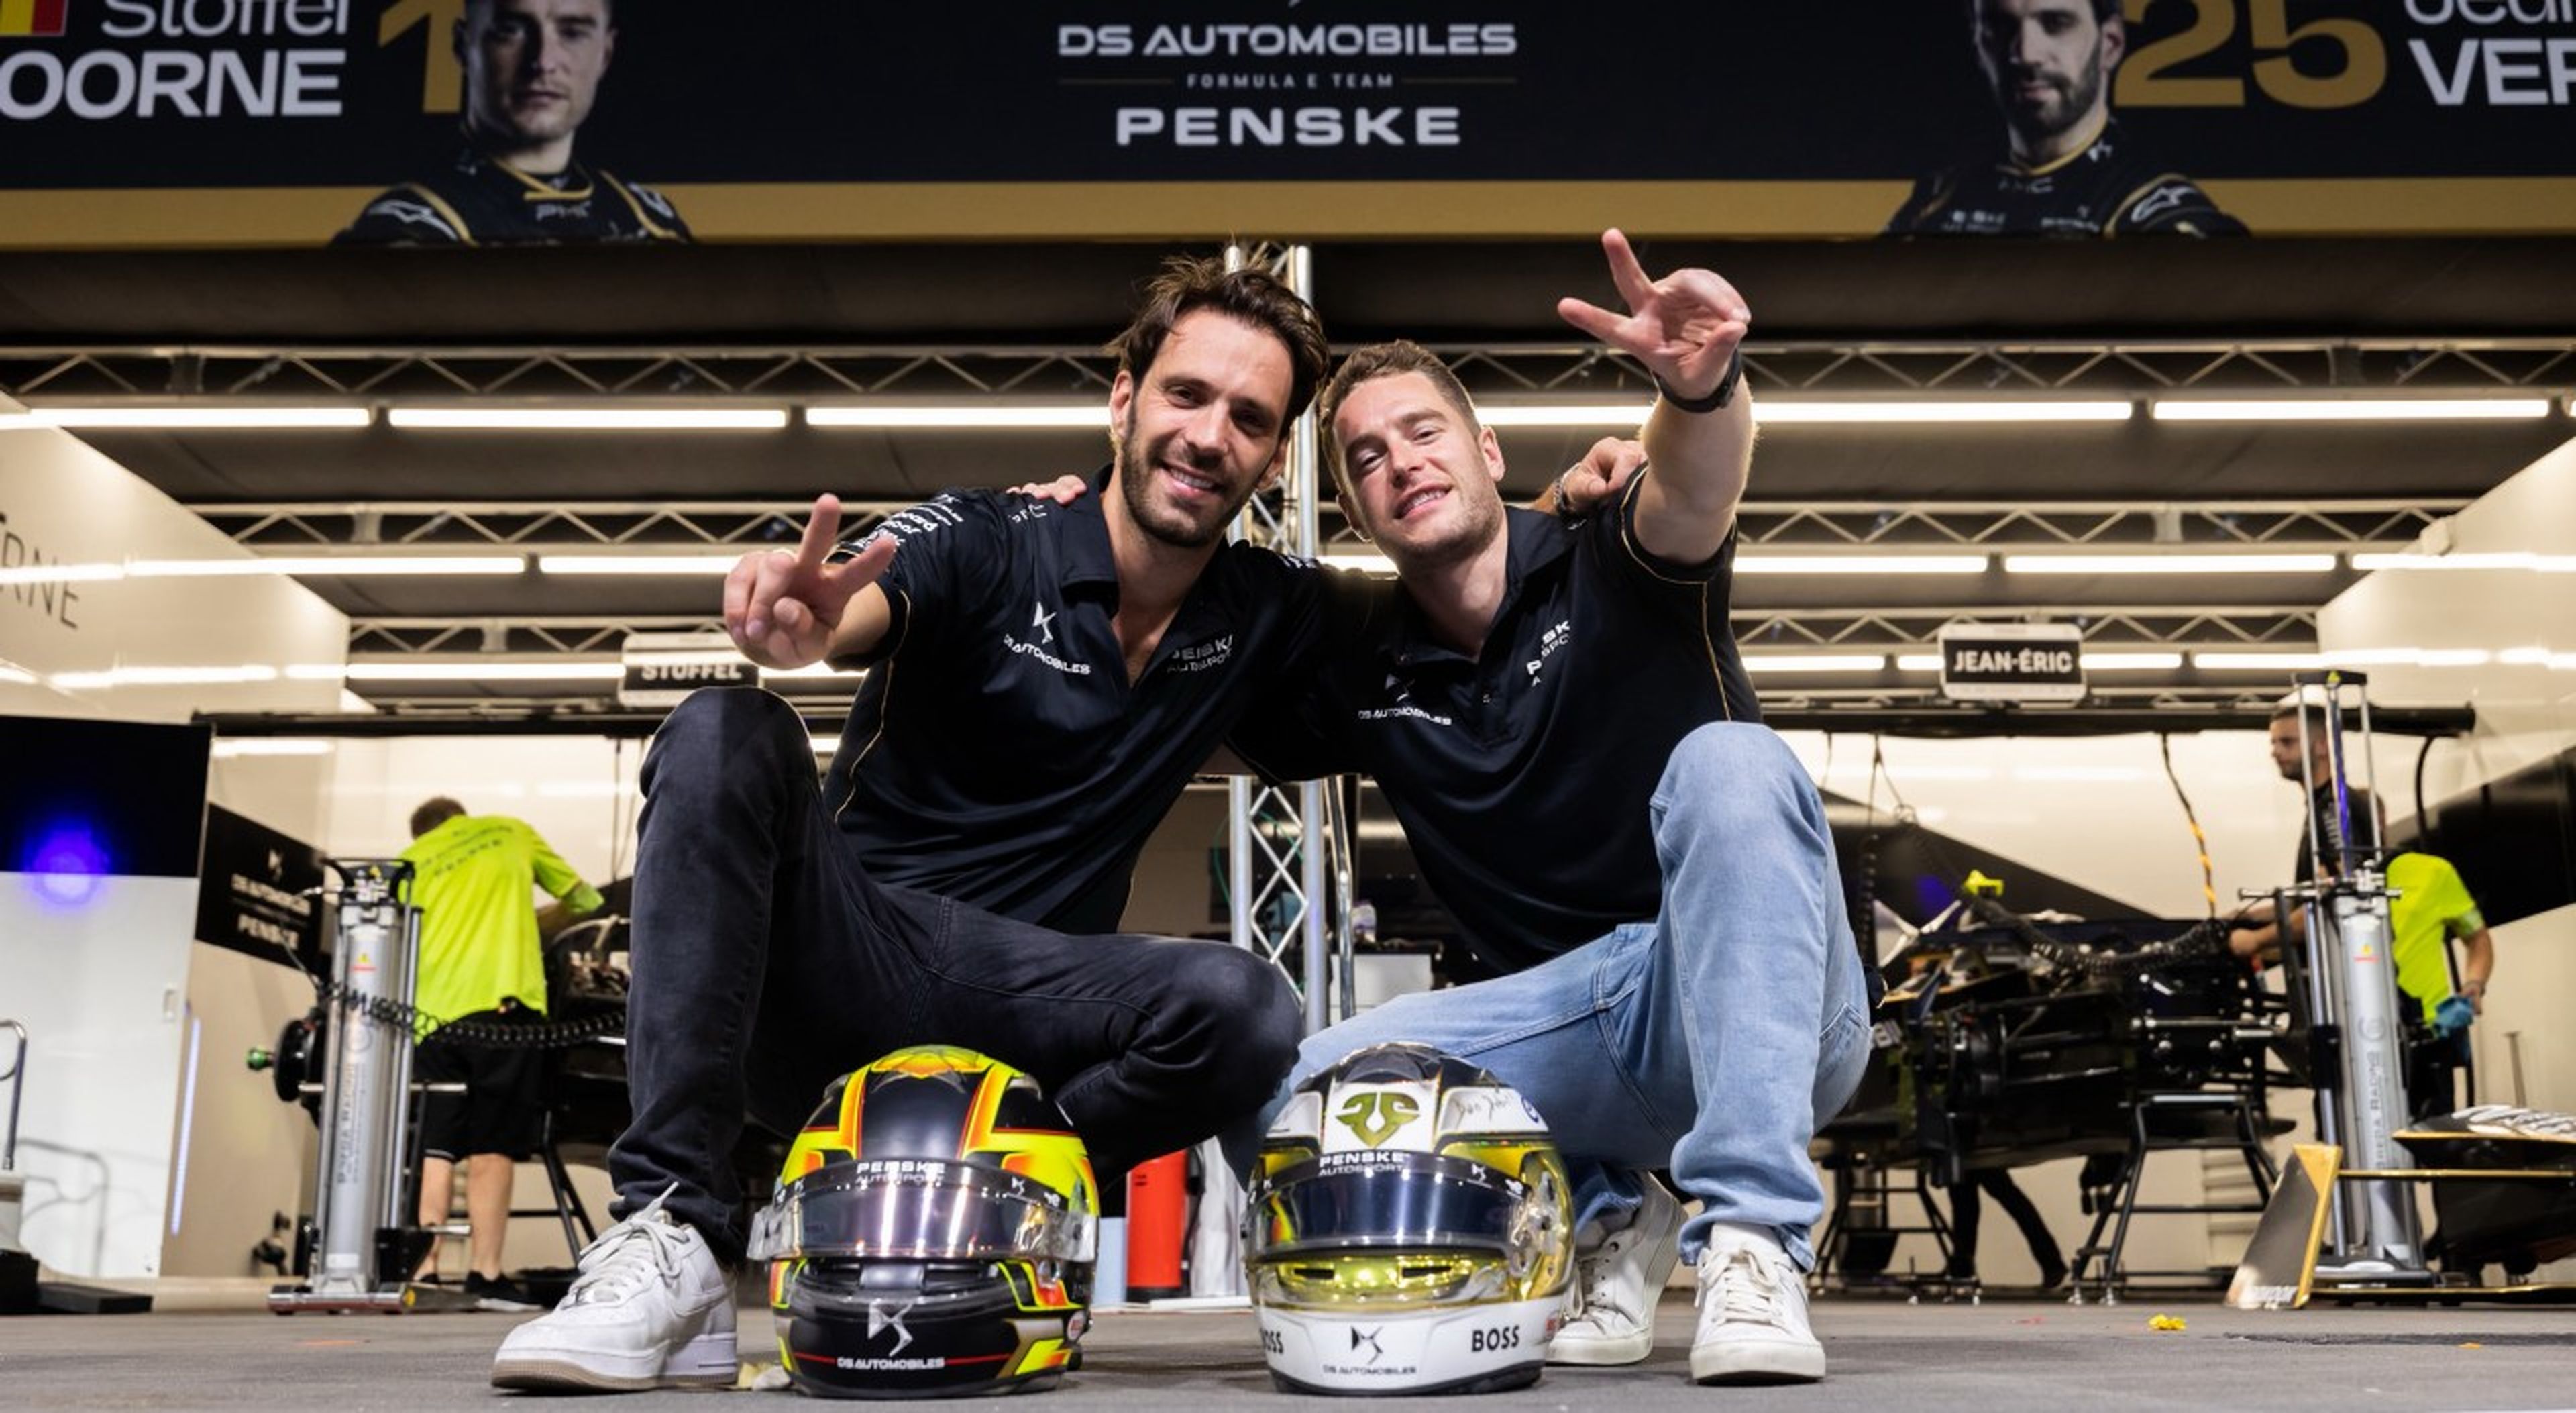 DS Formula E, Vergne y Vandoorne